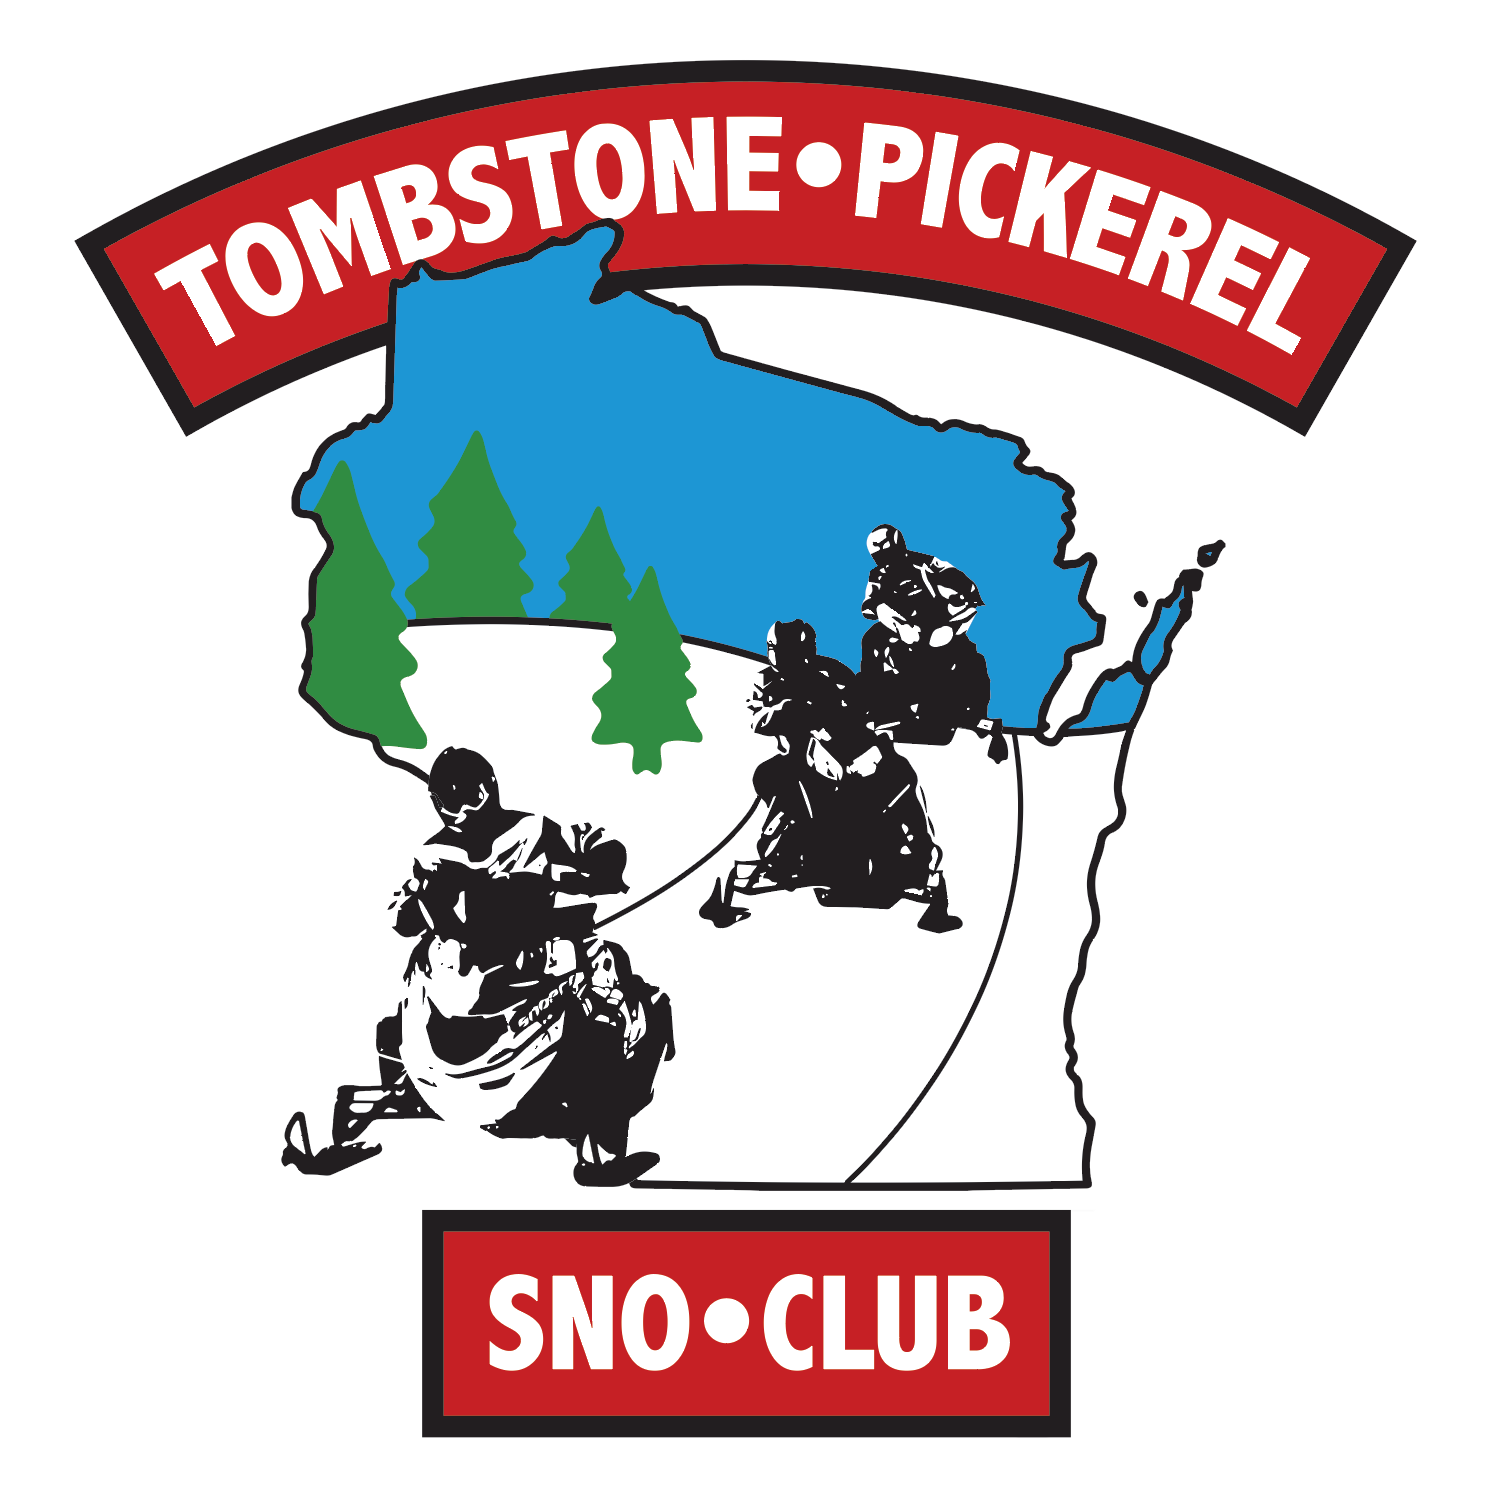 Tombstone Pickerel Sno Club